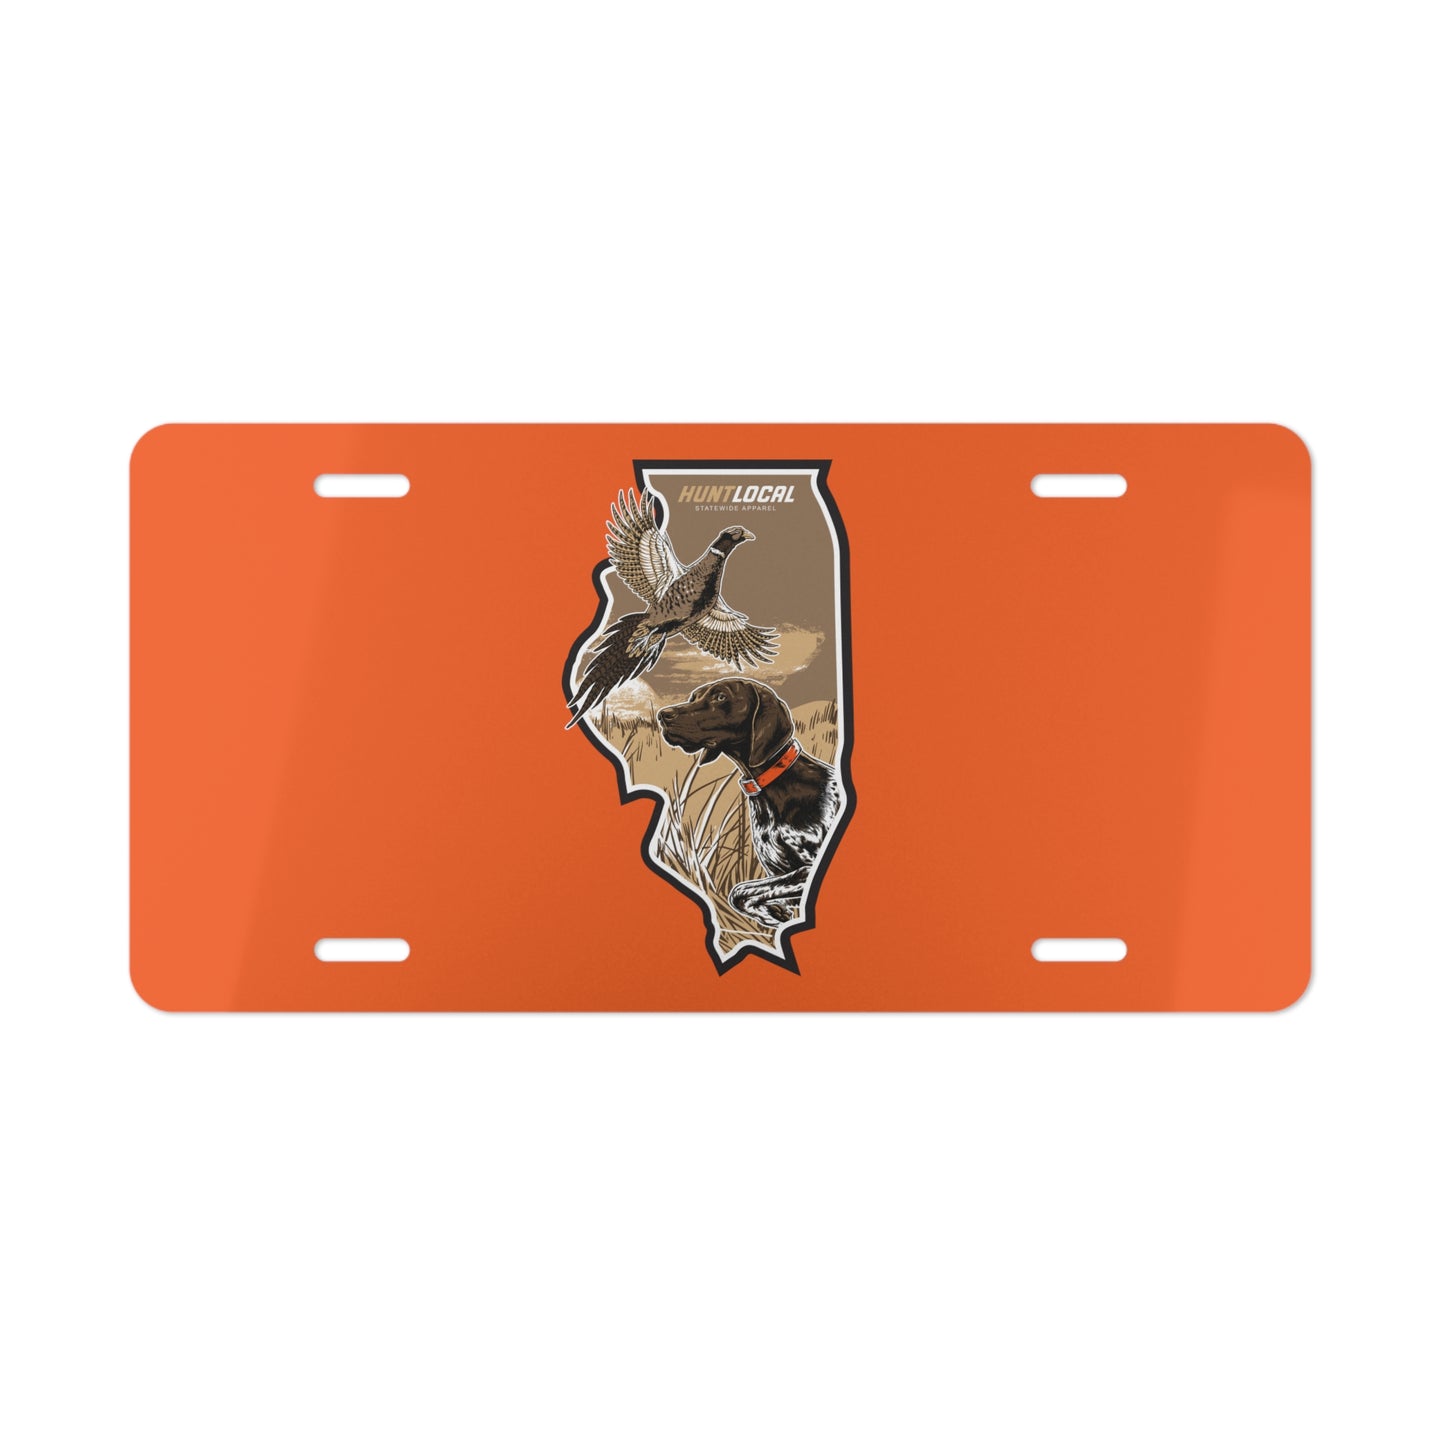 Illinois - Upland License Plate (orange)